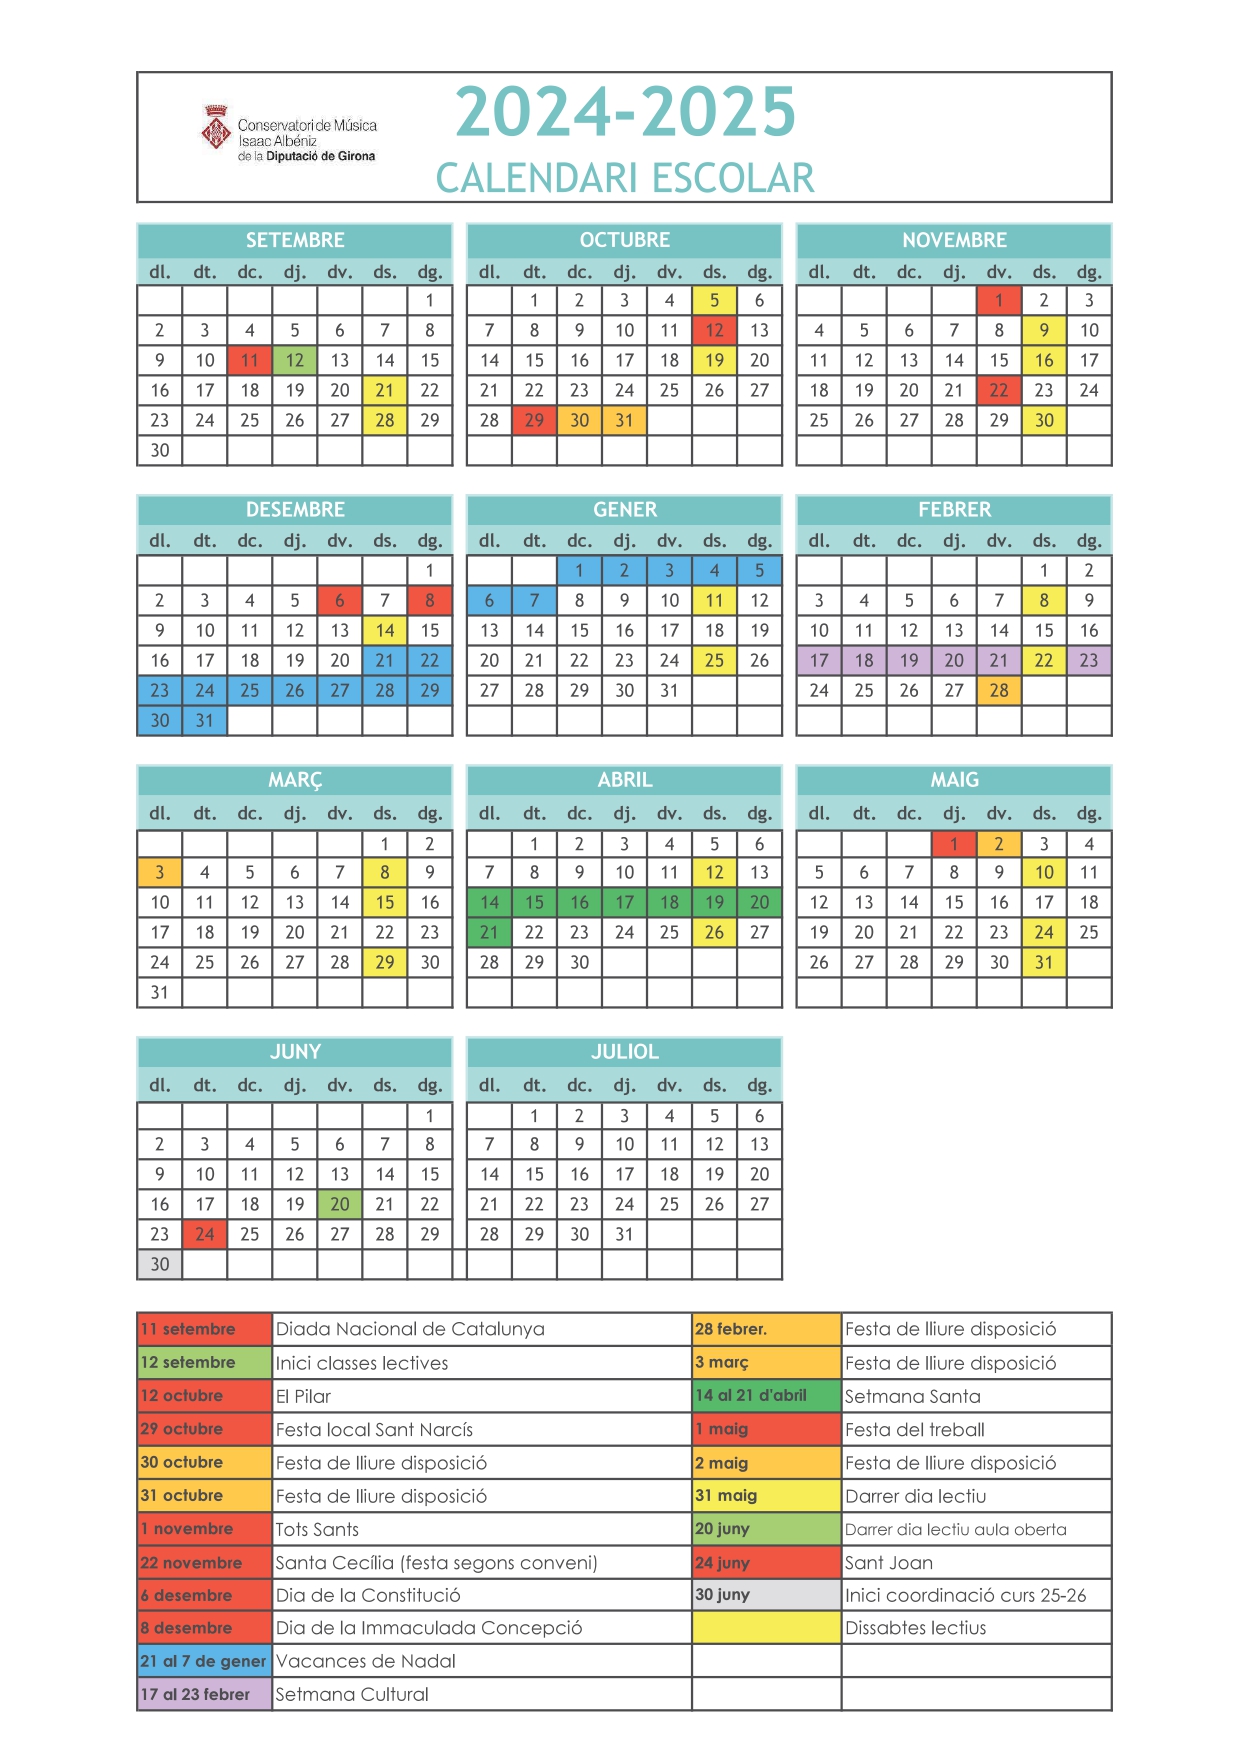 Calendari escolar 2024-2025